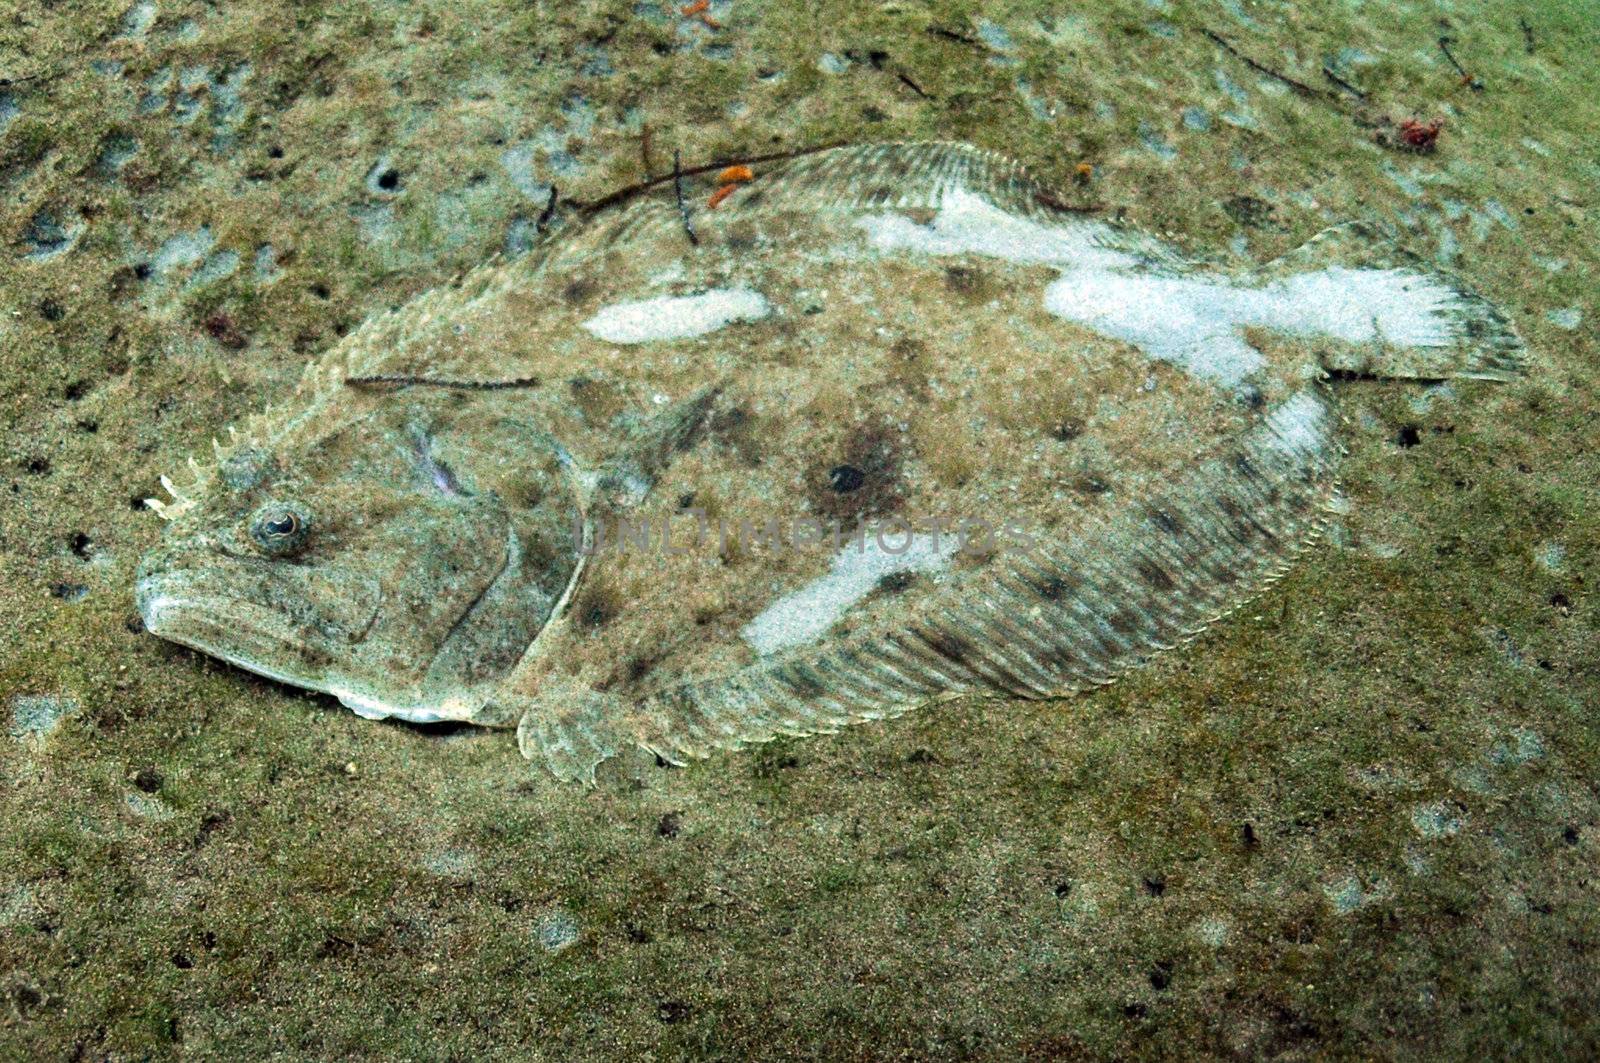 camoflage flounder on sand on bottom of ocean